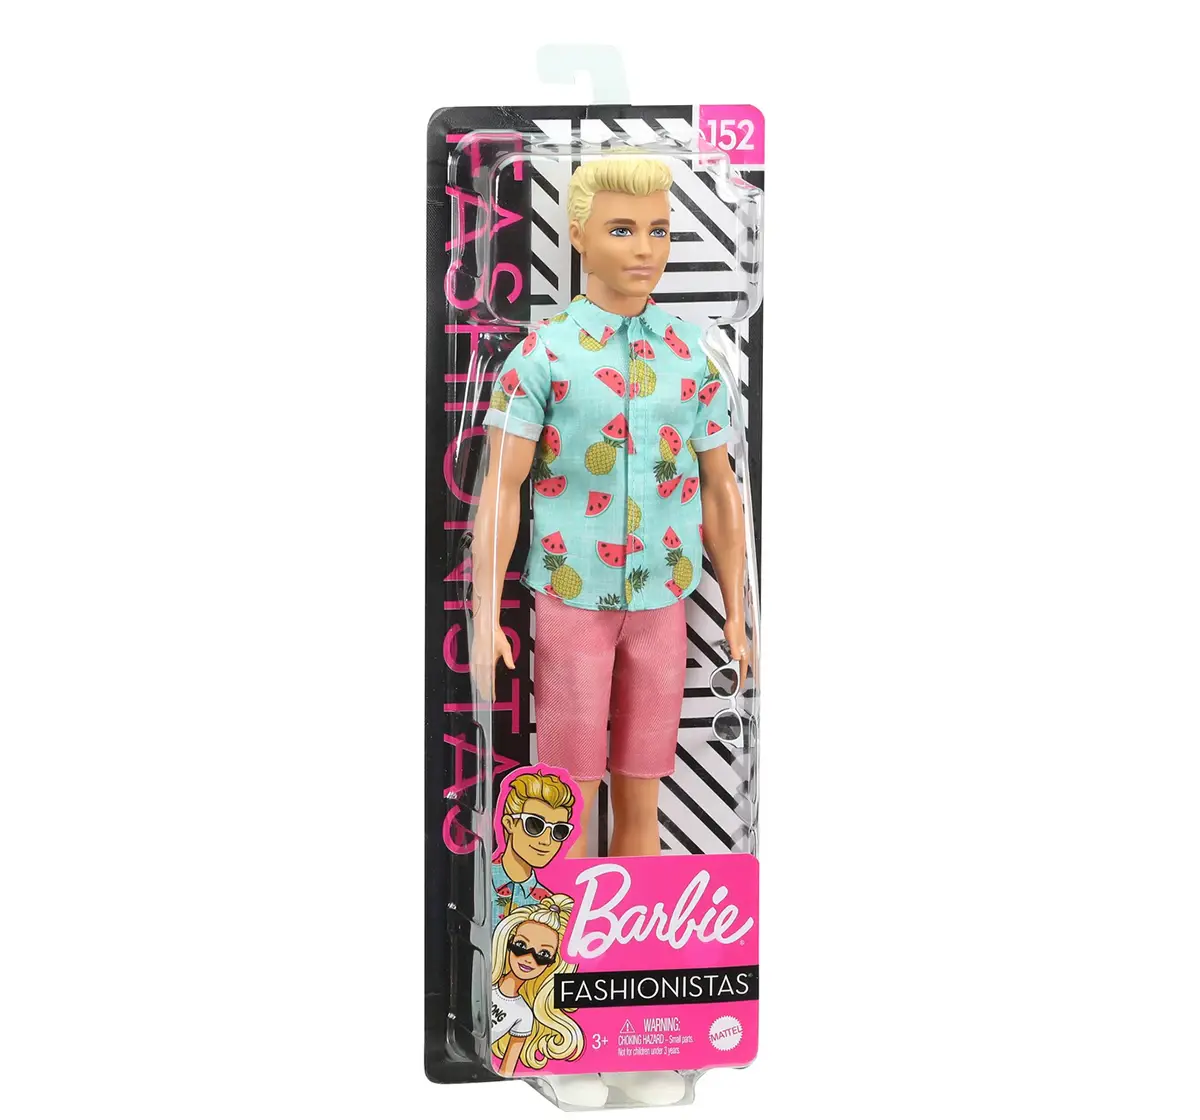 Barbie Ken Fashionistas Doll Dolls & Accessories for Girls age 3Y+, Assorted